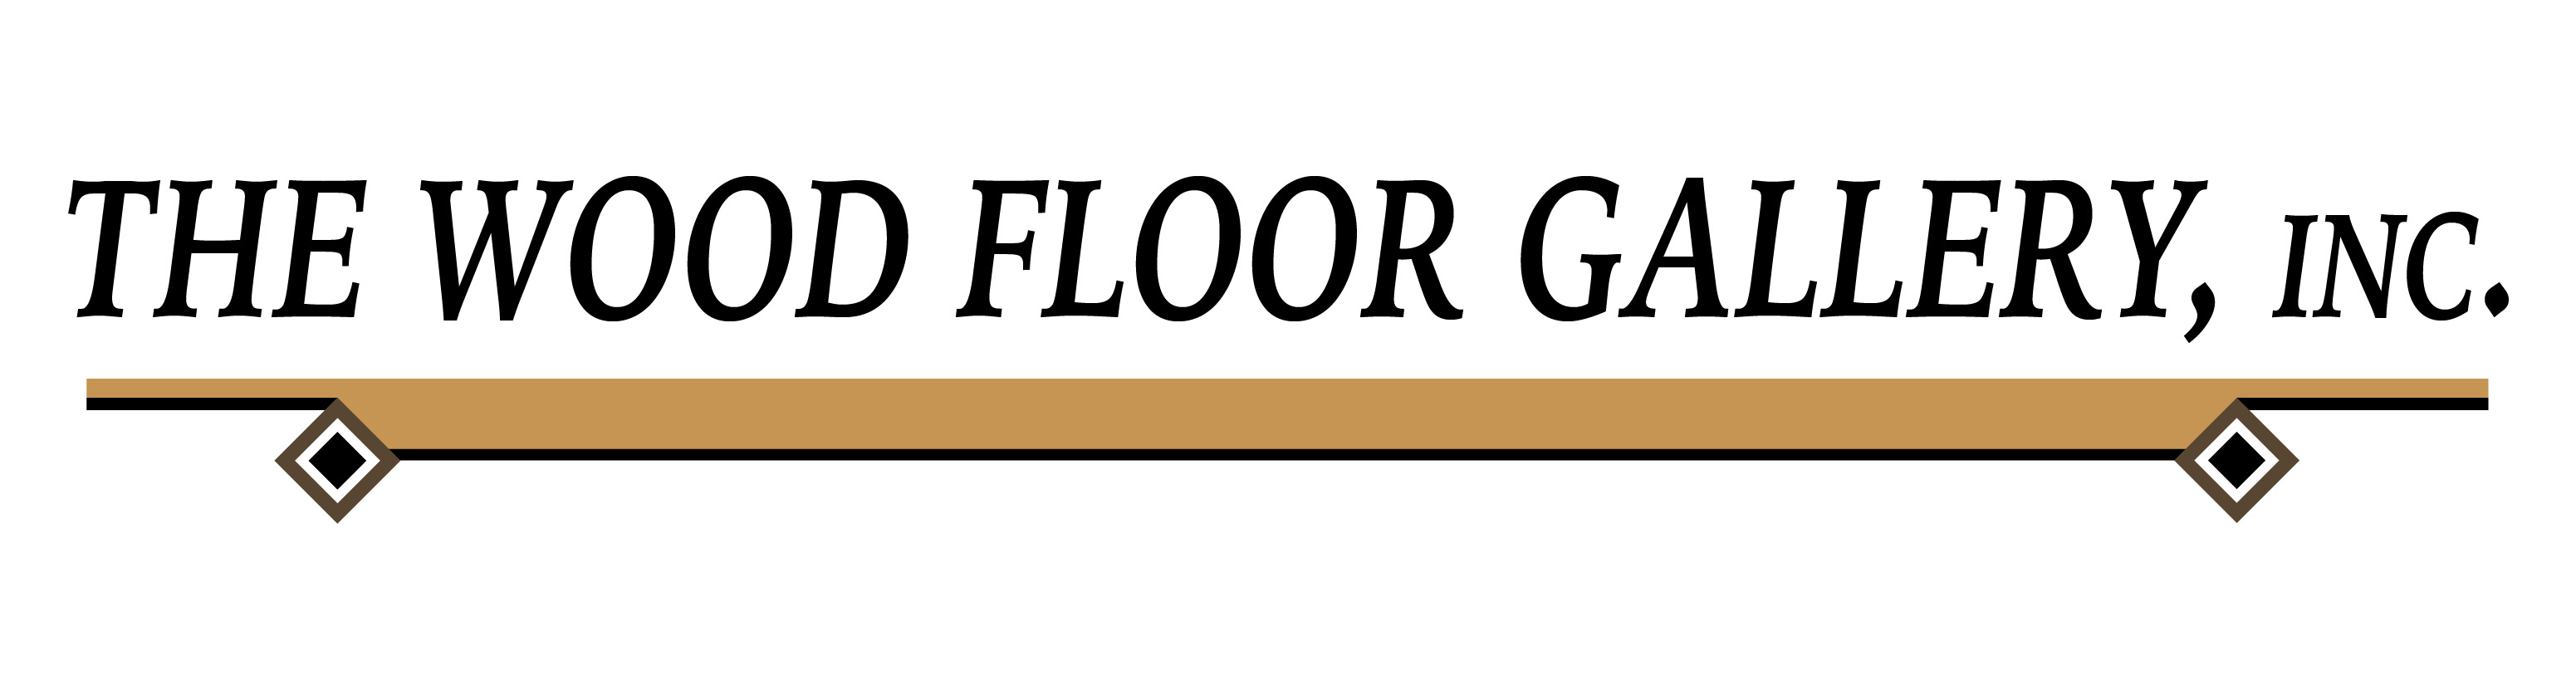 Professional Hard Wood Flooring Installation and Restoration | The Wood Floor Gallery